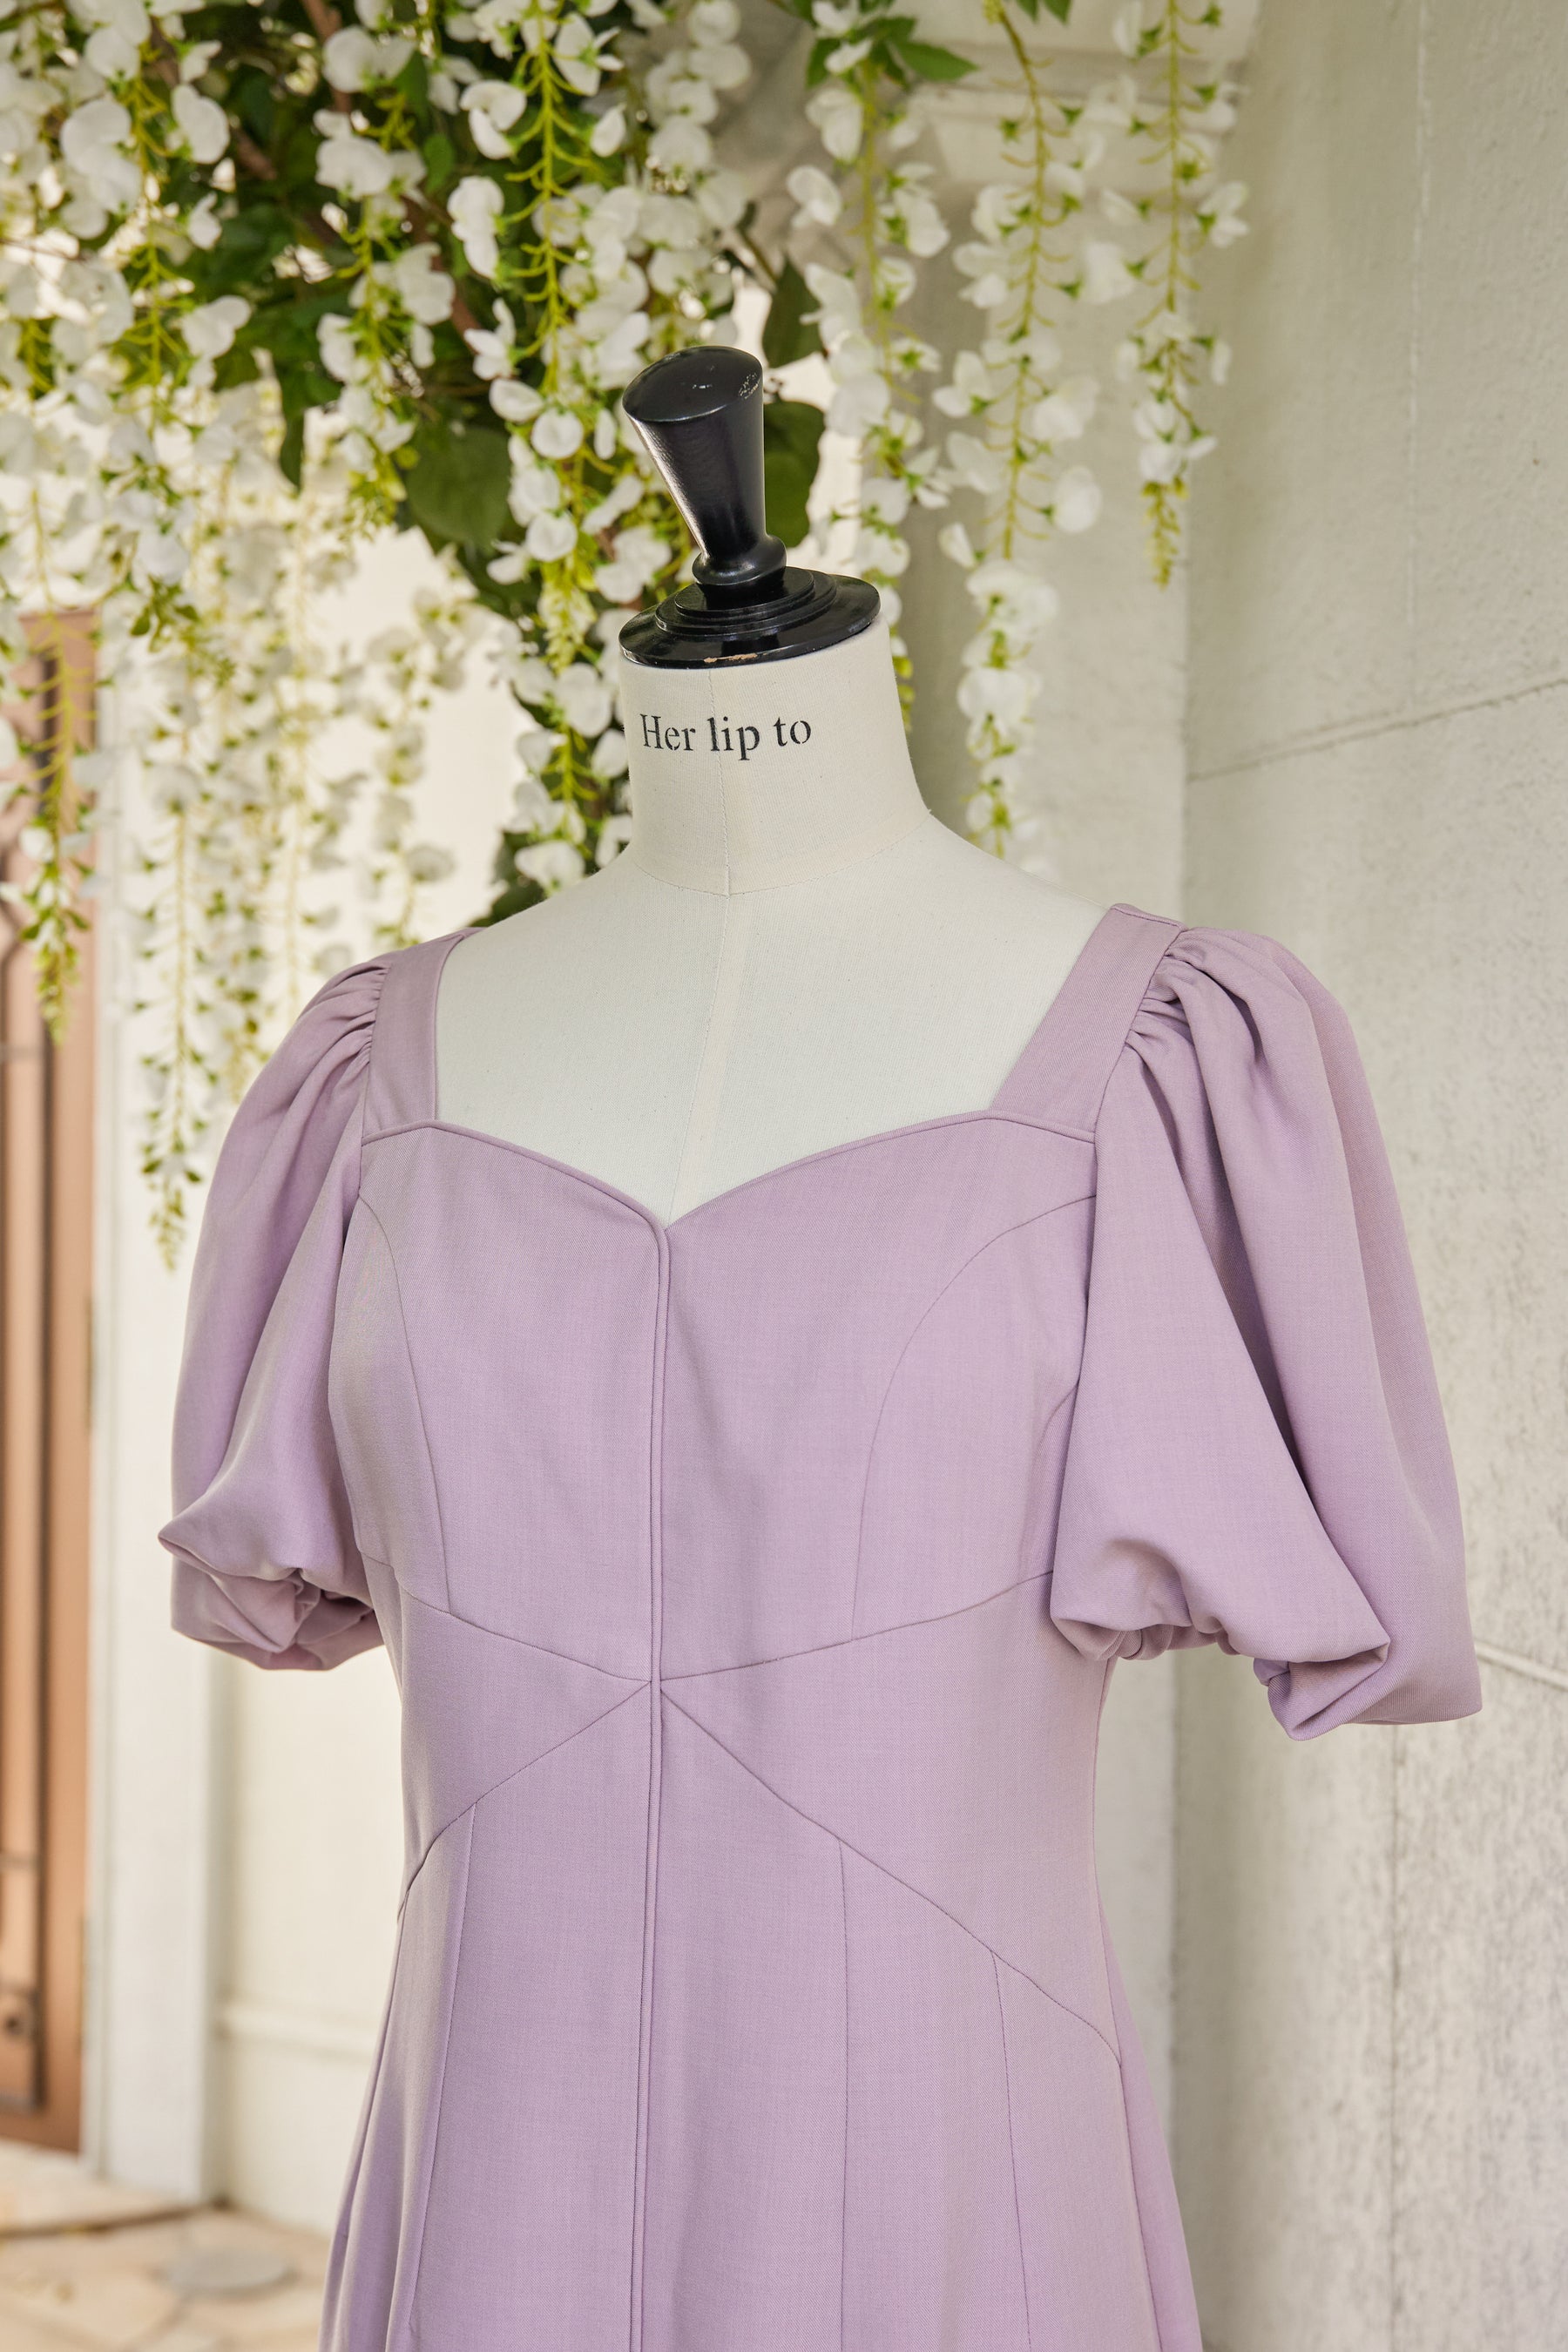 Herlipto】Dreamscape Twill Dress lilac Ｍ | www.fleettracktz.com